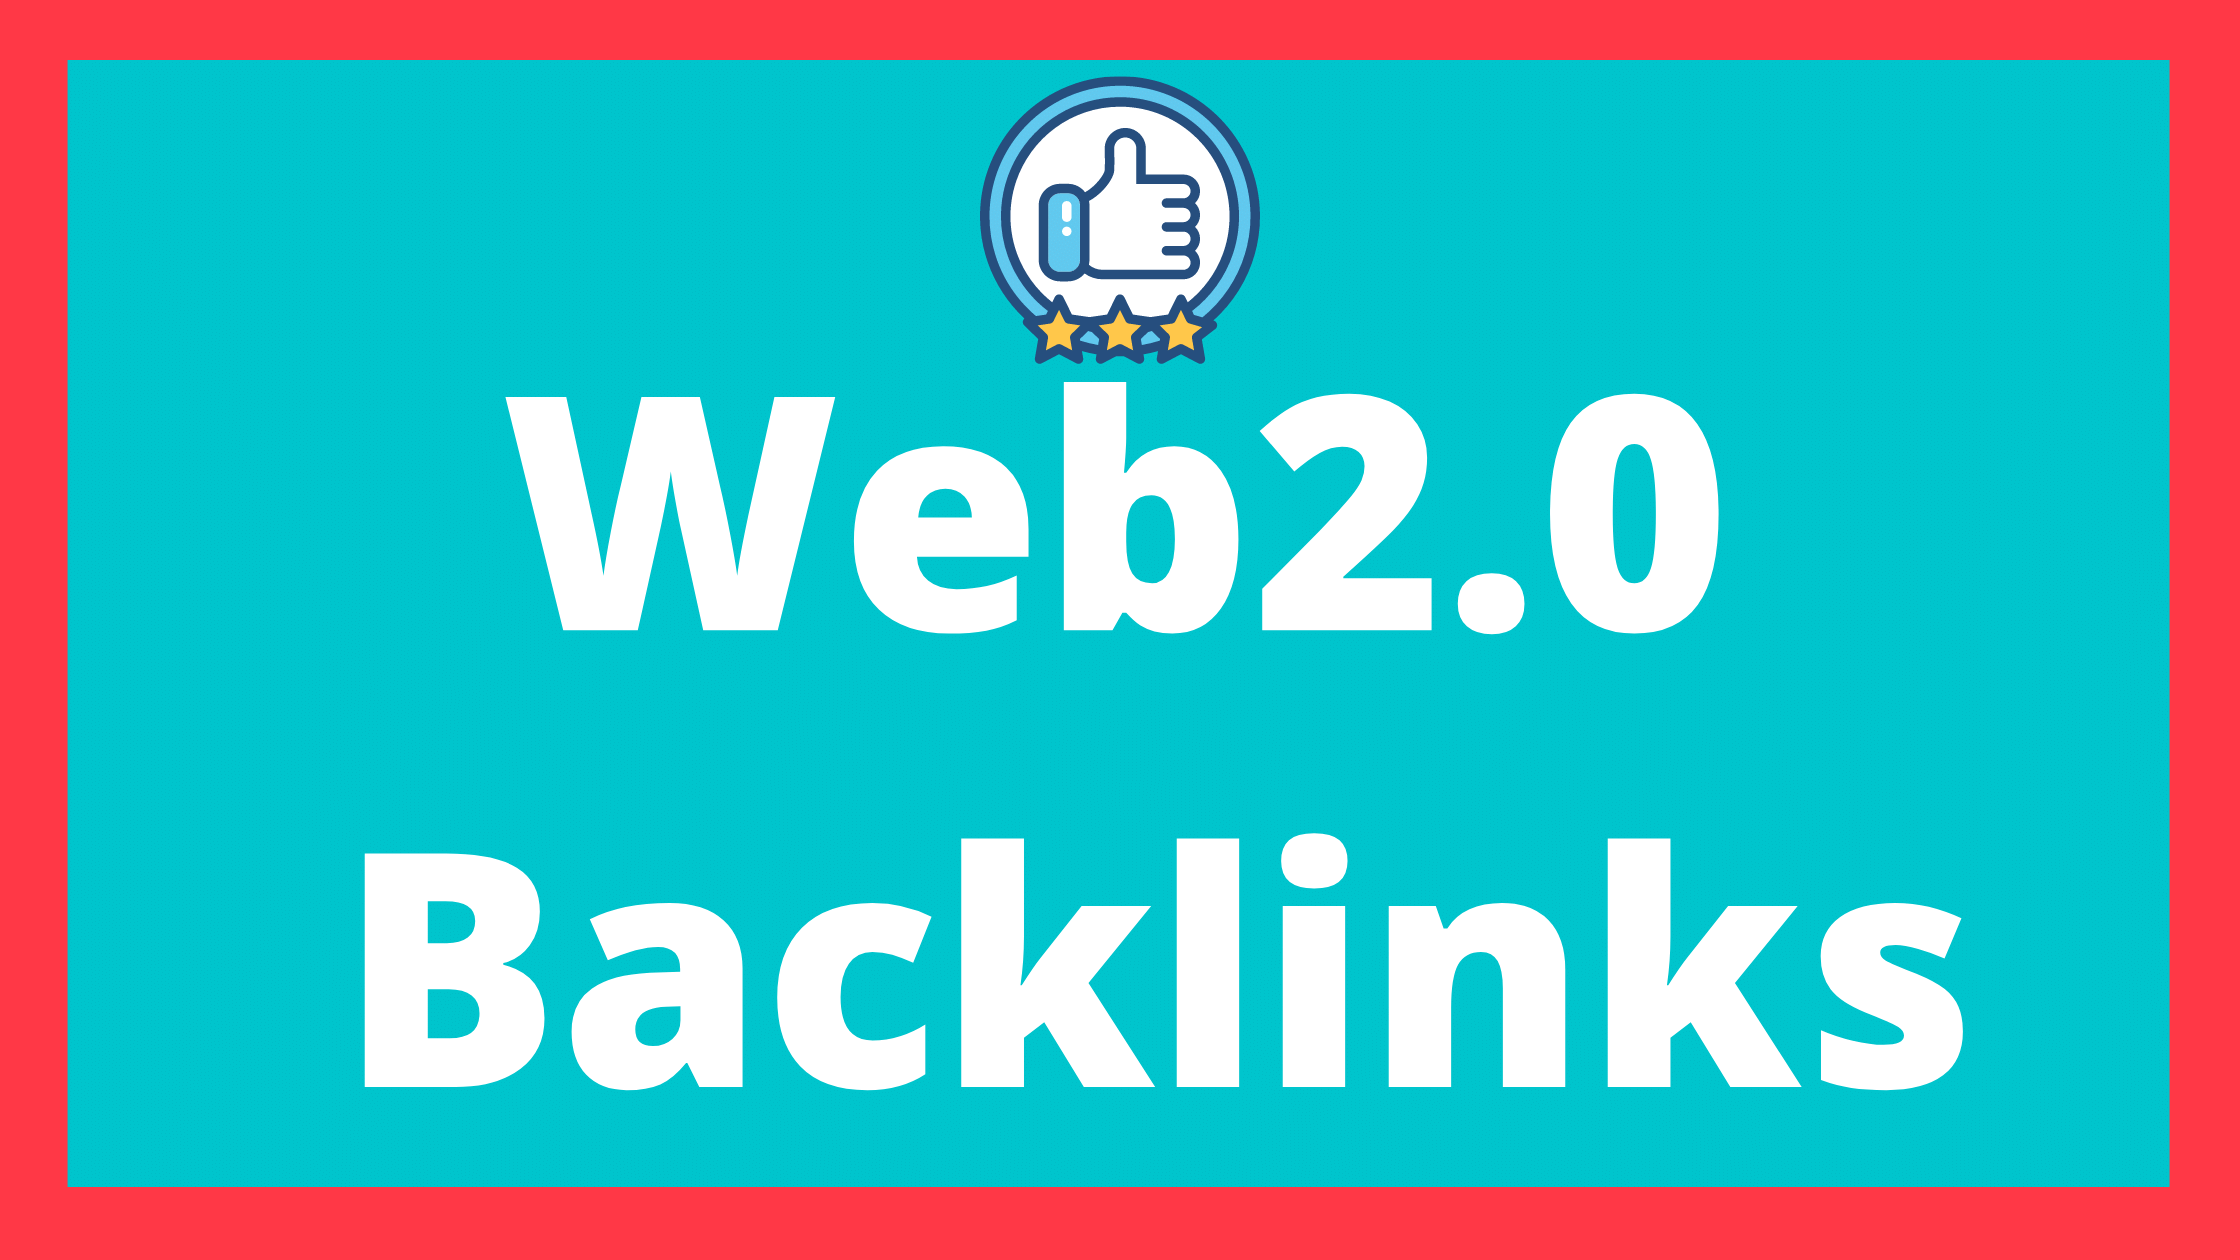 Create 500+ Web20 SEO Backlinks from authority websites 